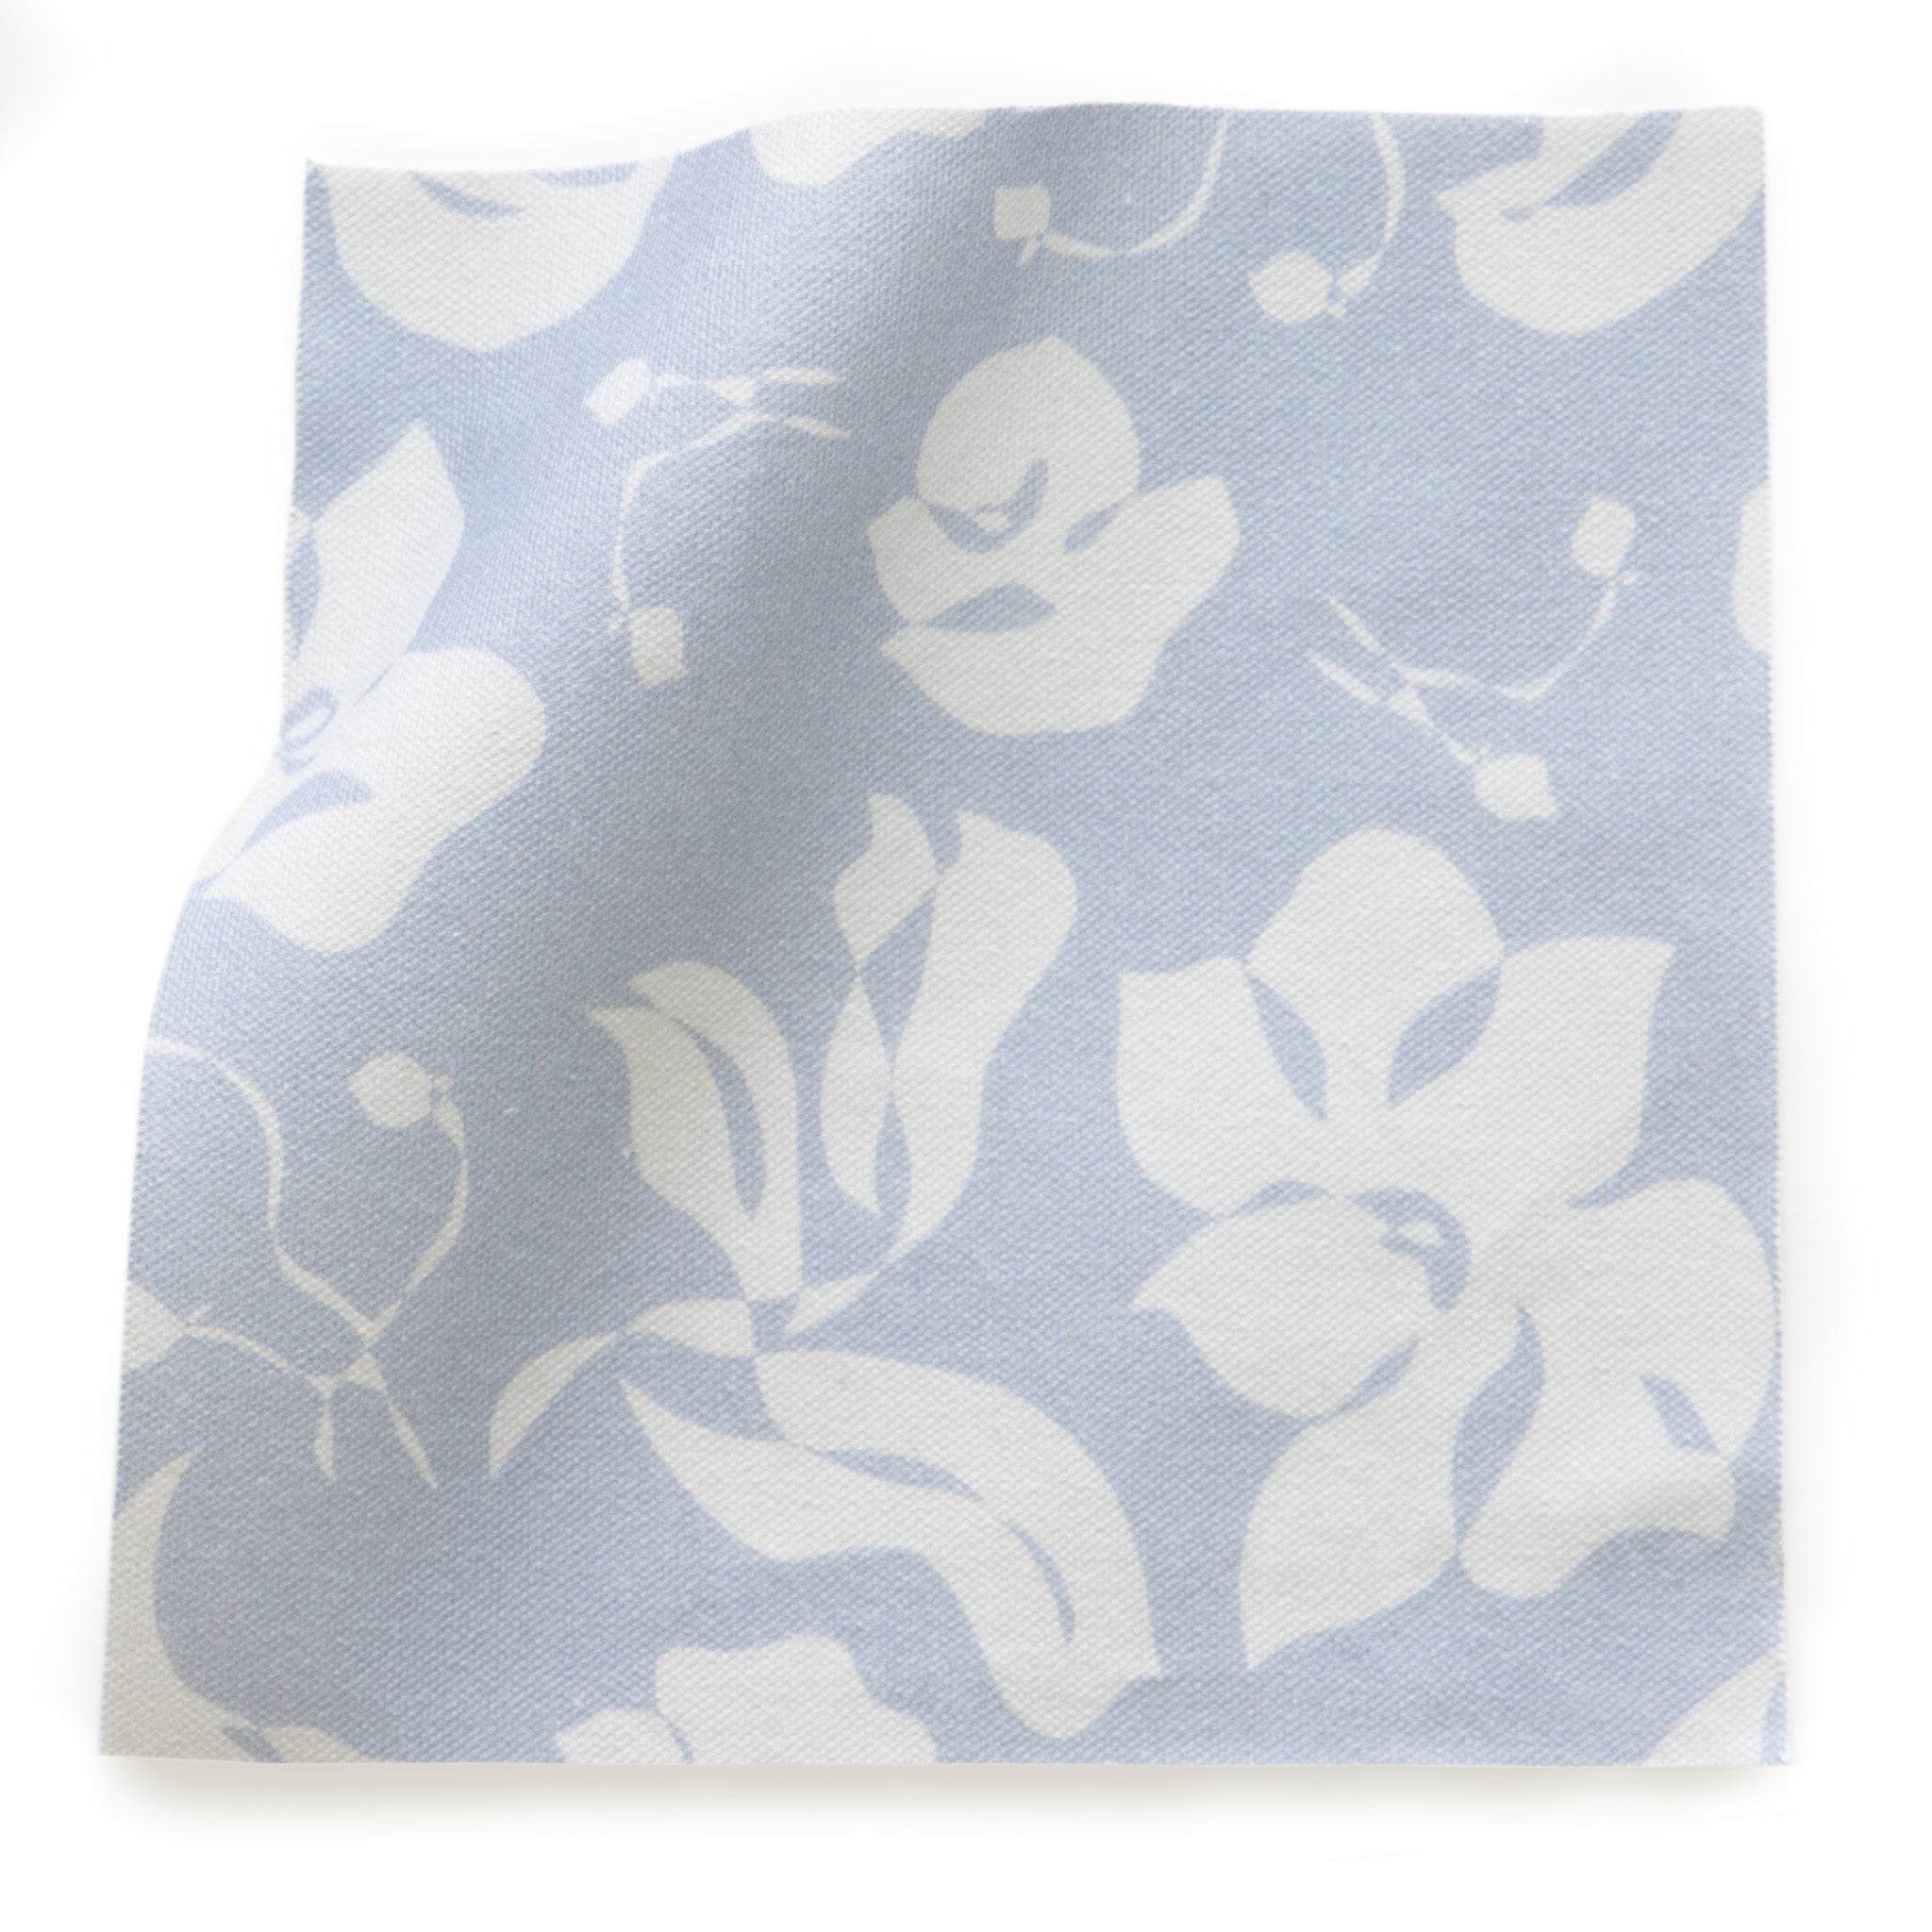 Cornflower Blue Floral Printed Cotton Swatch